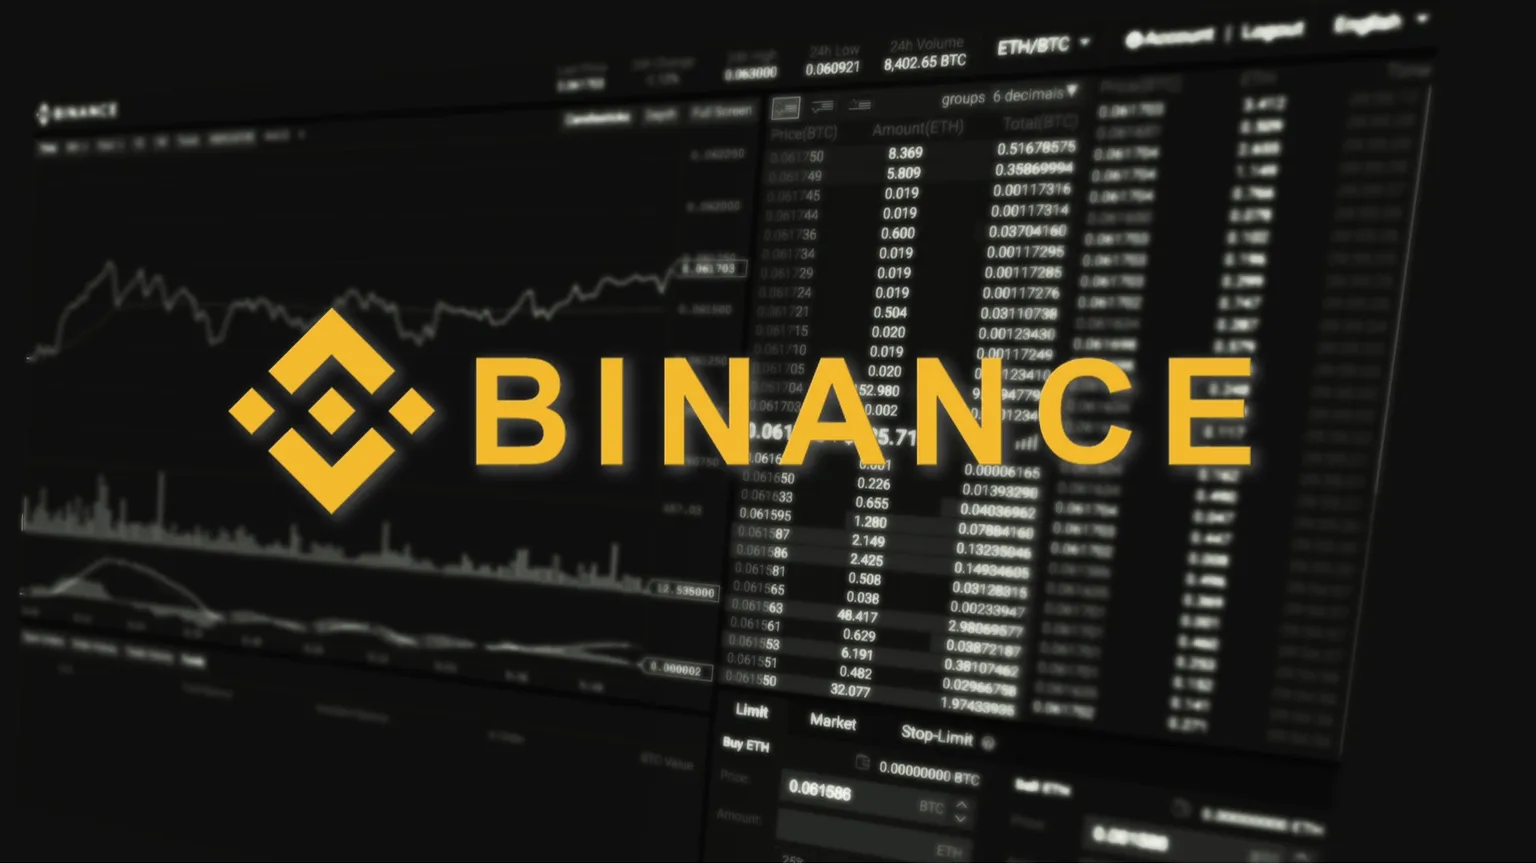 Logo de Binance en pantalla de trading. Imagen: Shutterstock